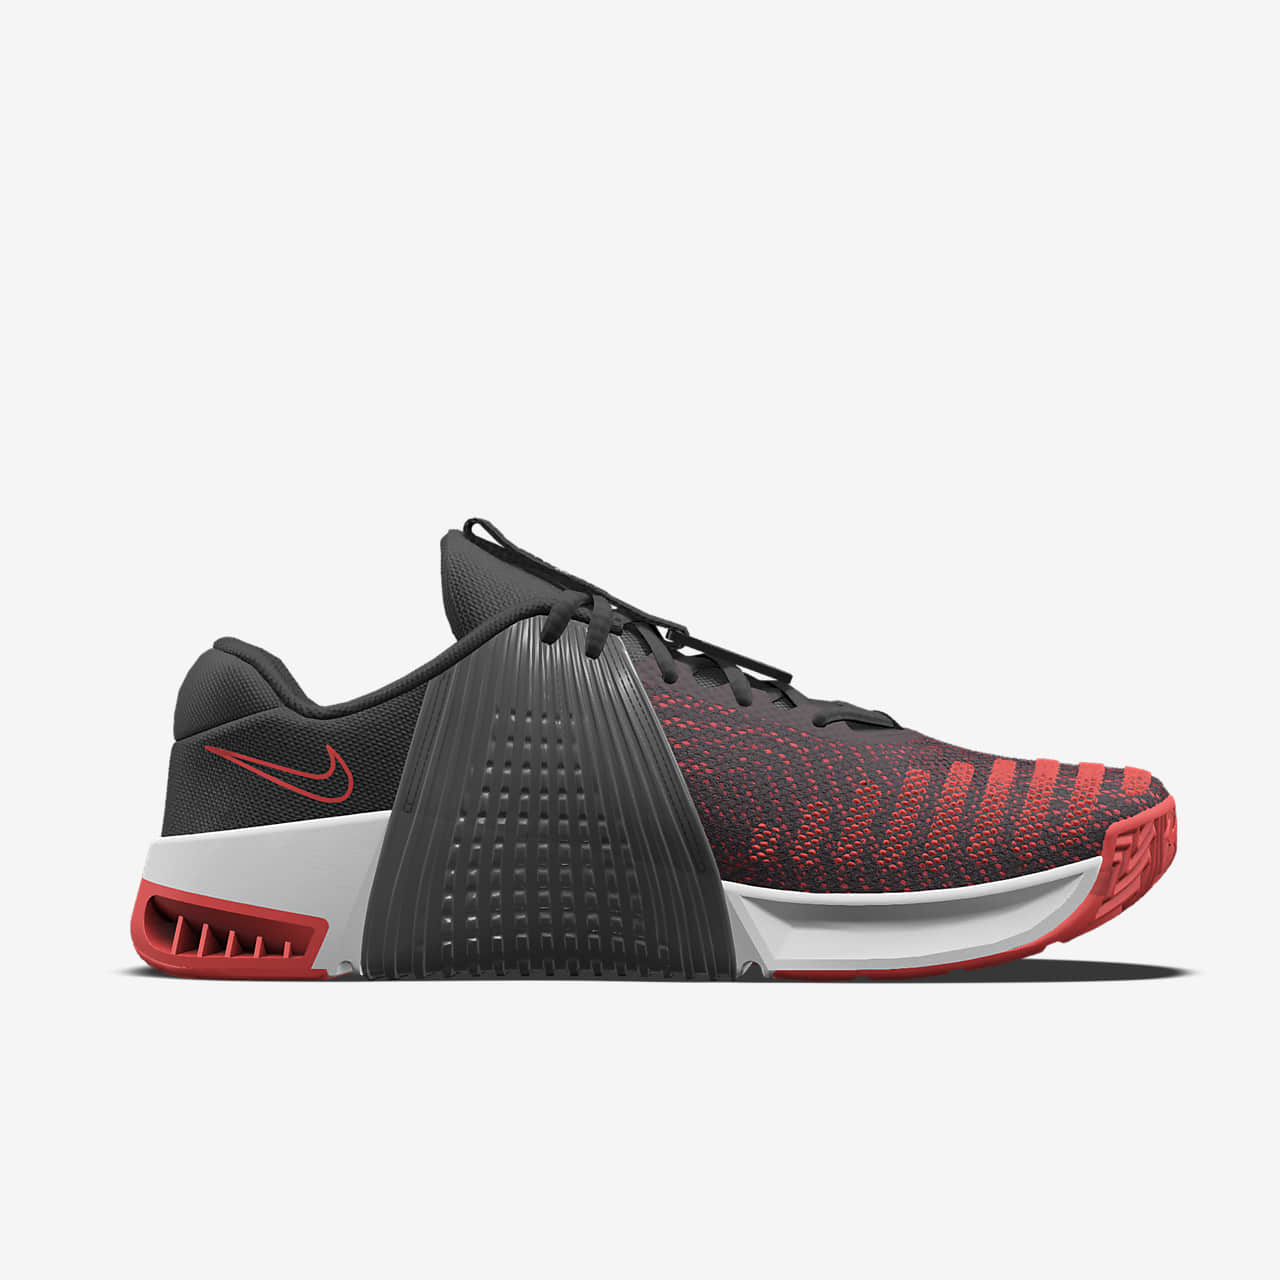 MetconTribe  📷: Nike Metcon 9 By @kadamsonx. Thanks for the pics